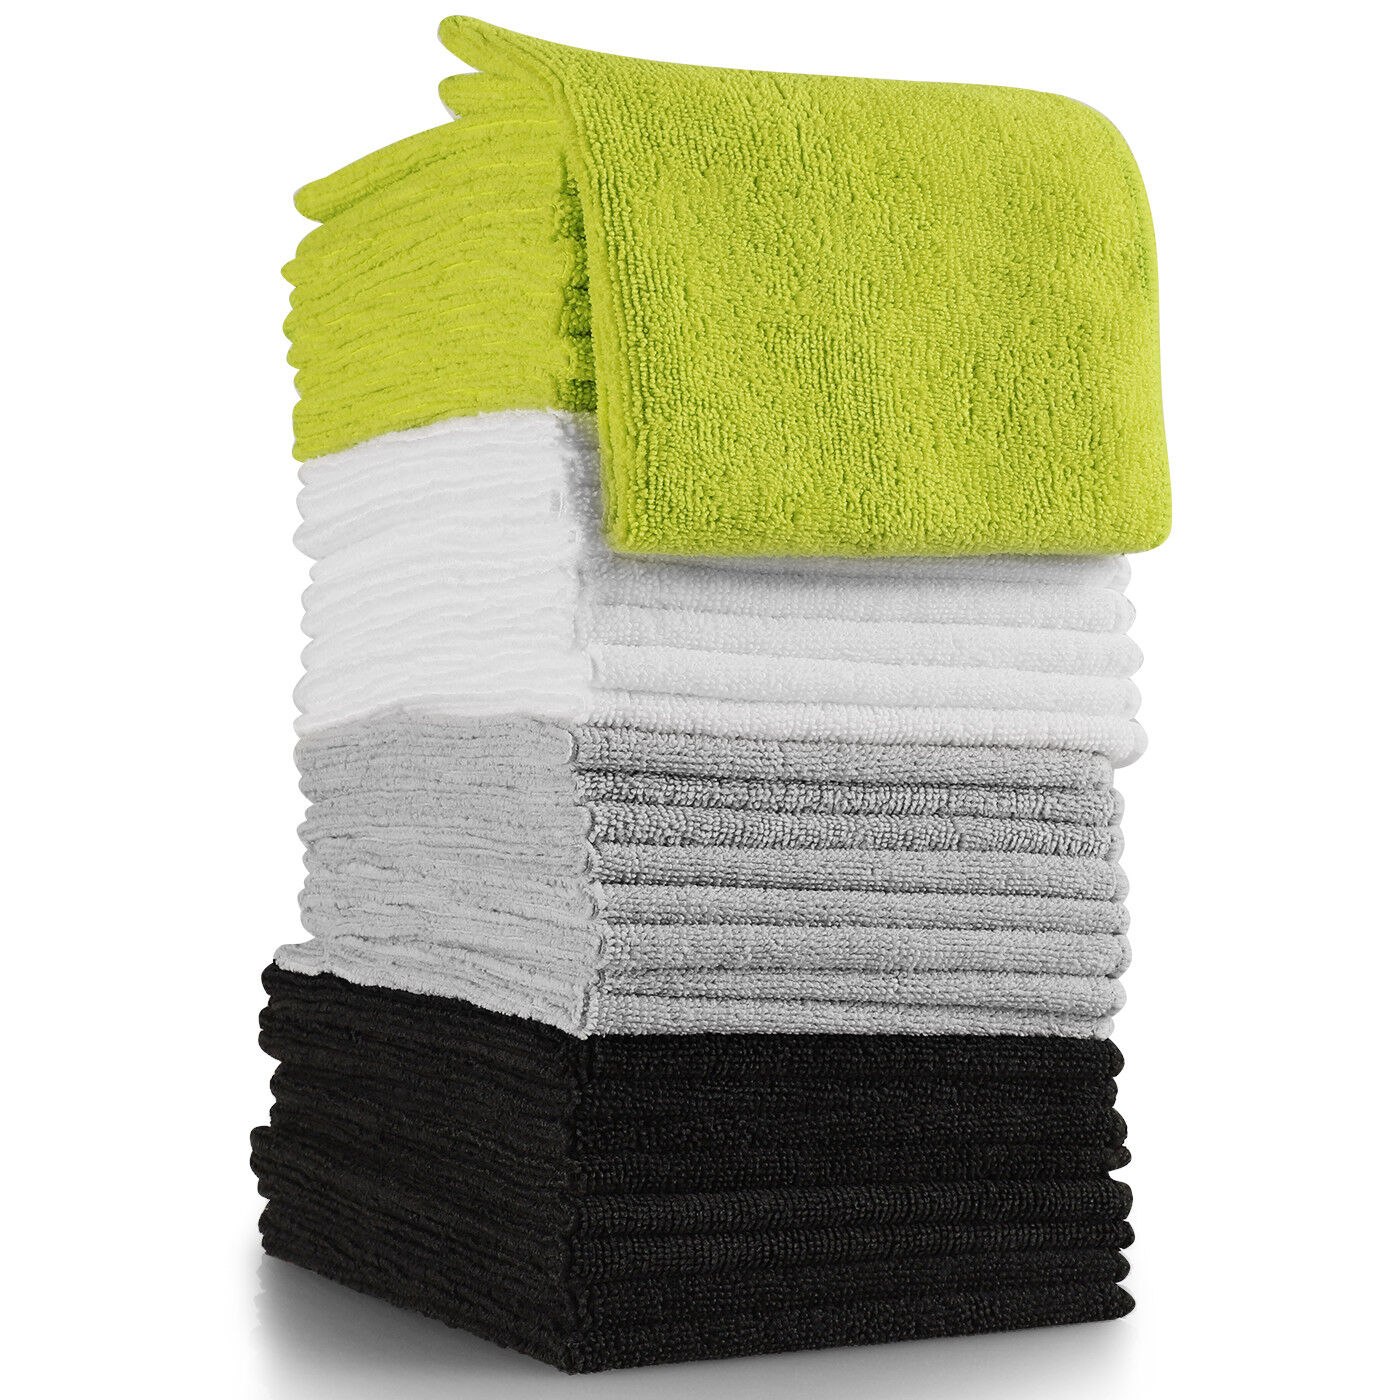 Microfiber Cloth Clean 32pc Set Towel Duster Rag Sponge for Car Wash Auto Care